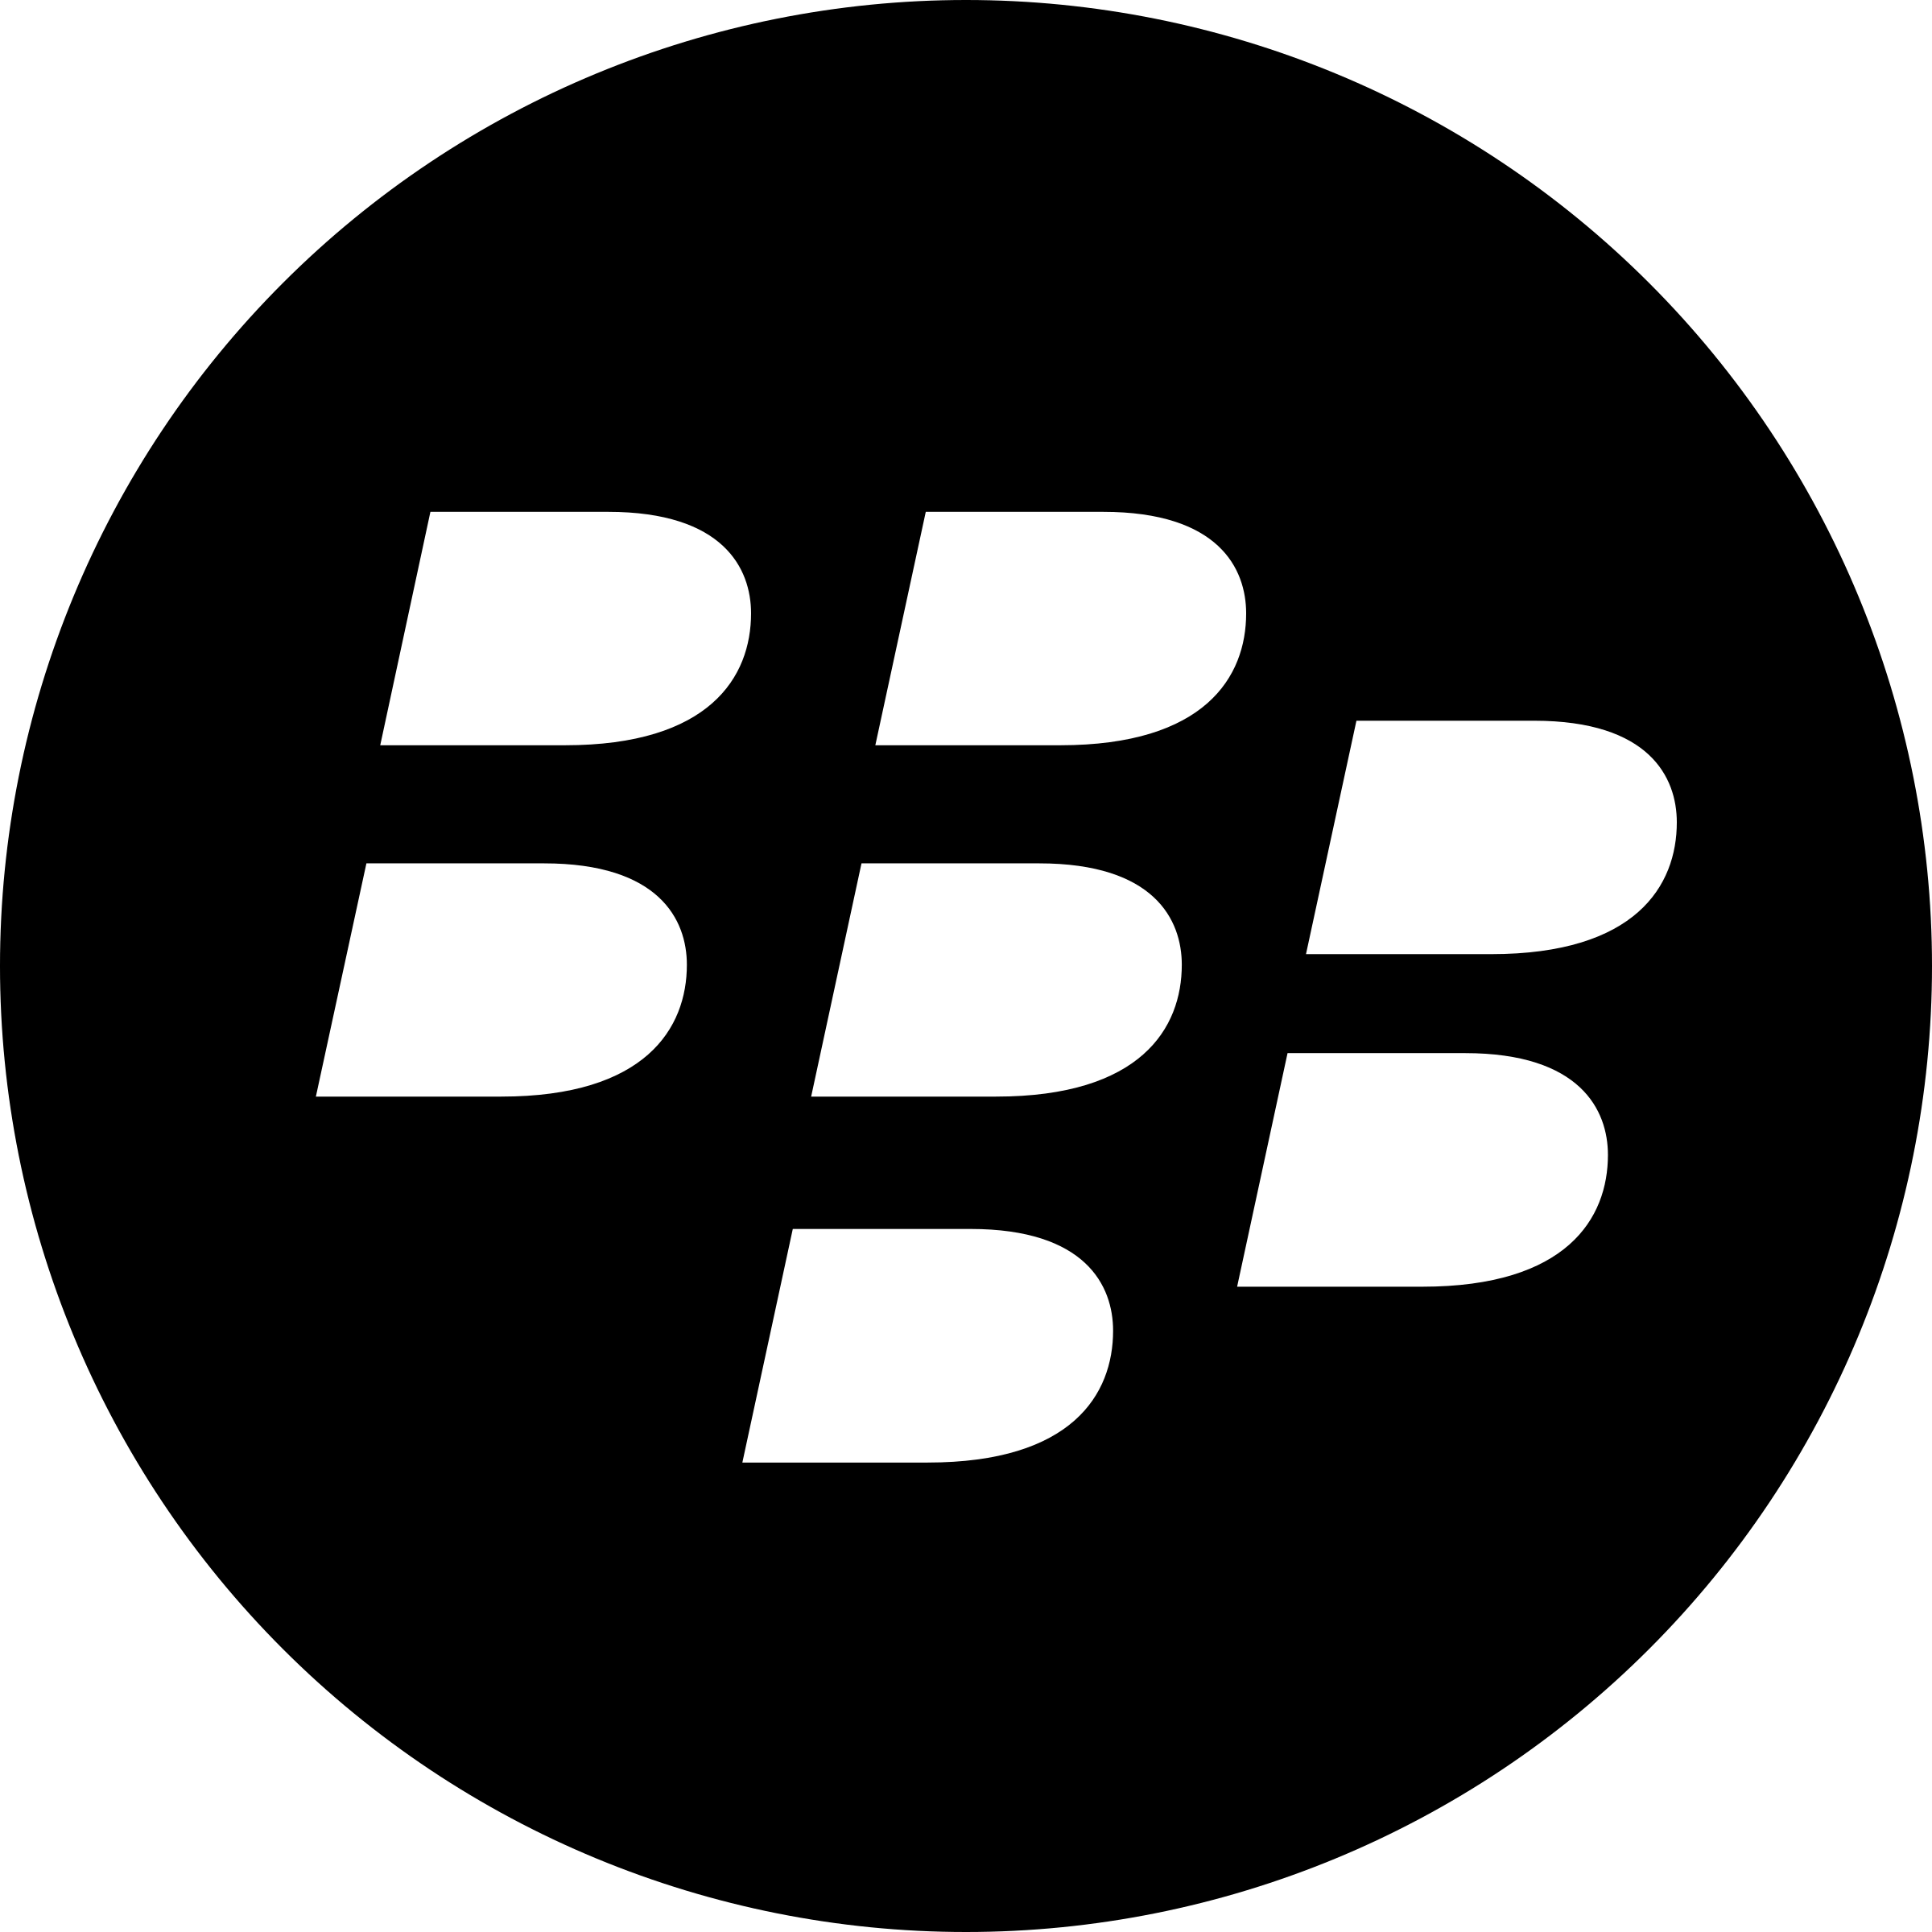 BBM Logo - BBM BlackBerry Messenger Logo PNG Transparent & SVG Vector - Freebie ...